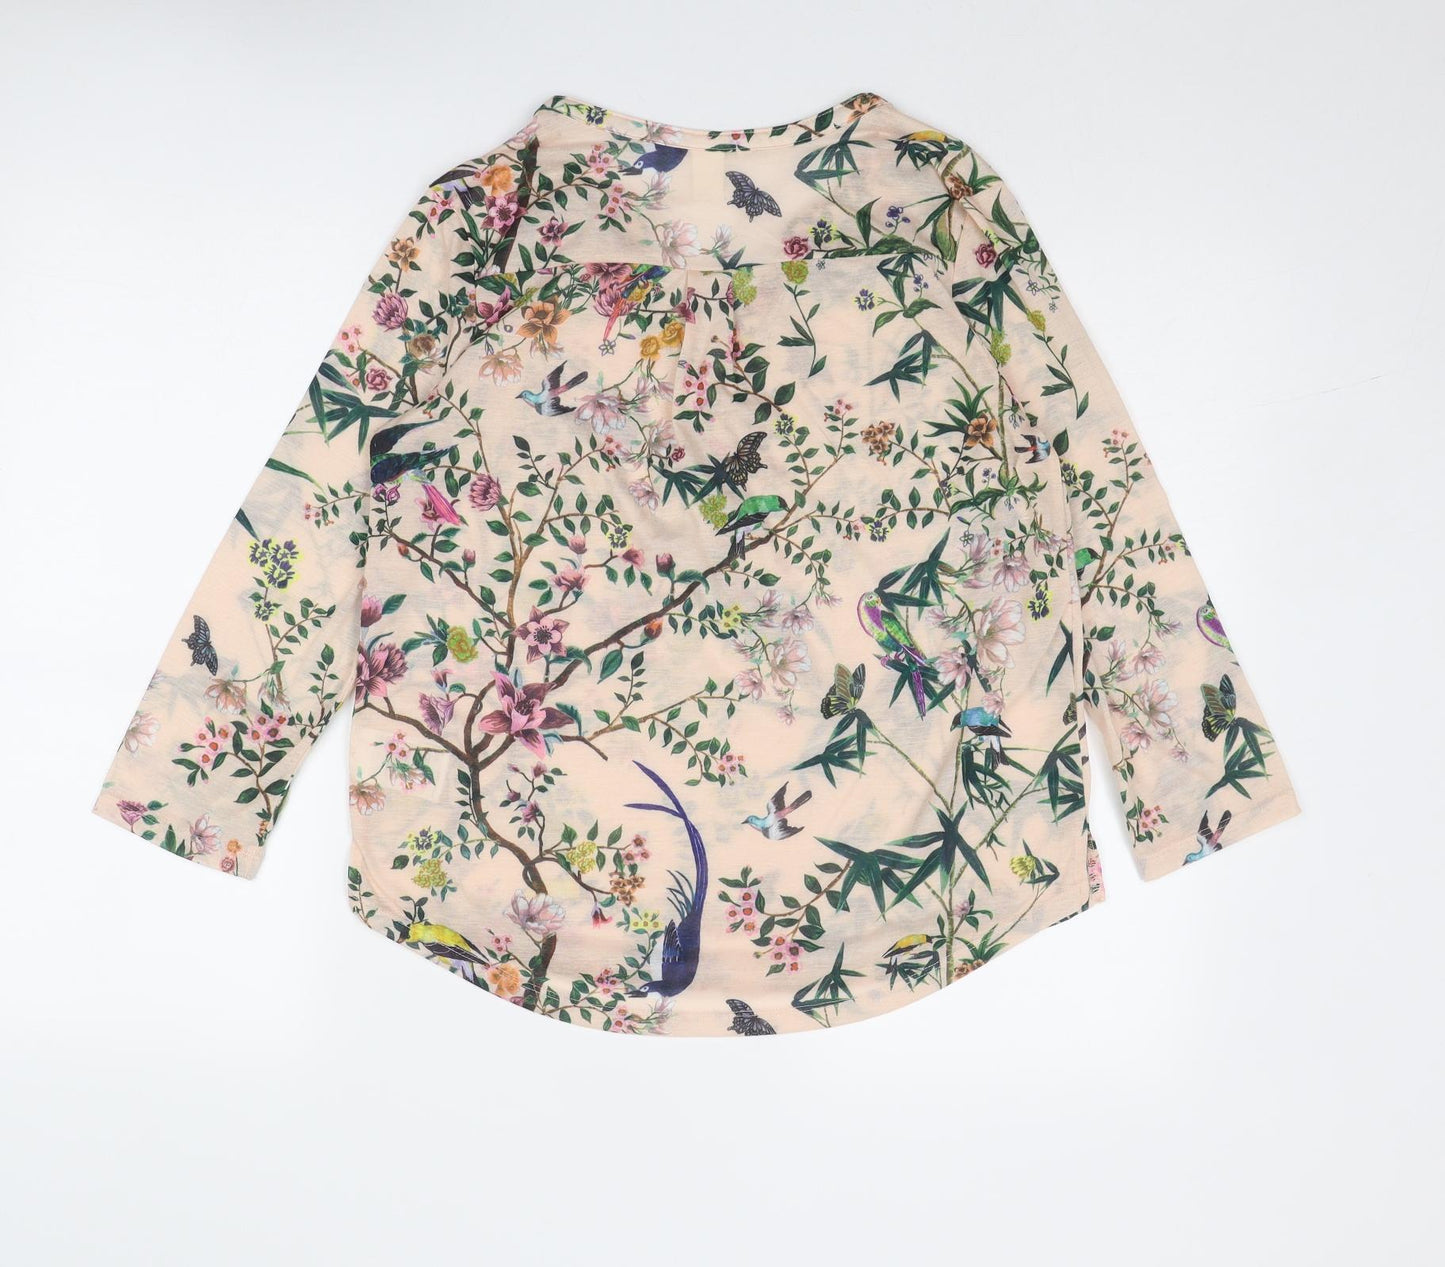 H&M Womens Multicoloured Geometric Polyester Basic T-Shirt Size S V-Neck - Leaf Print Bird